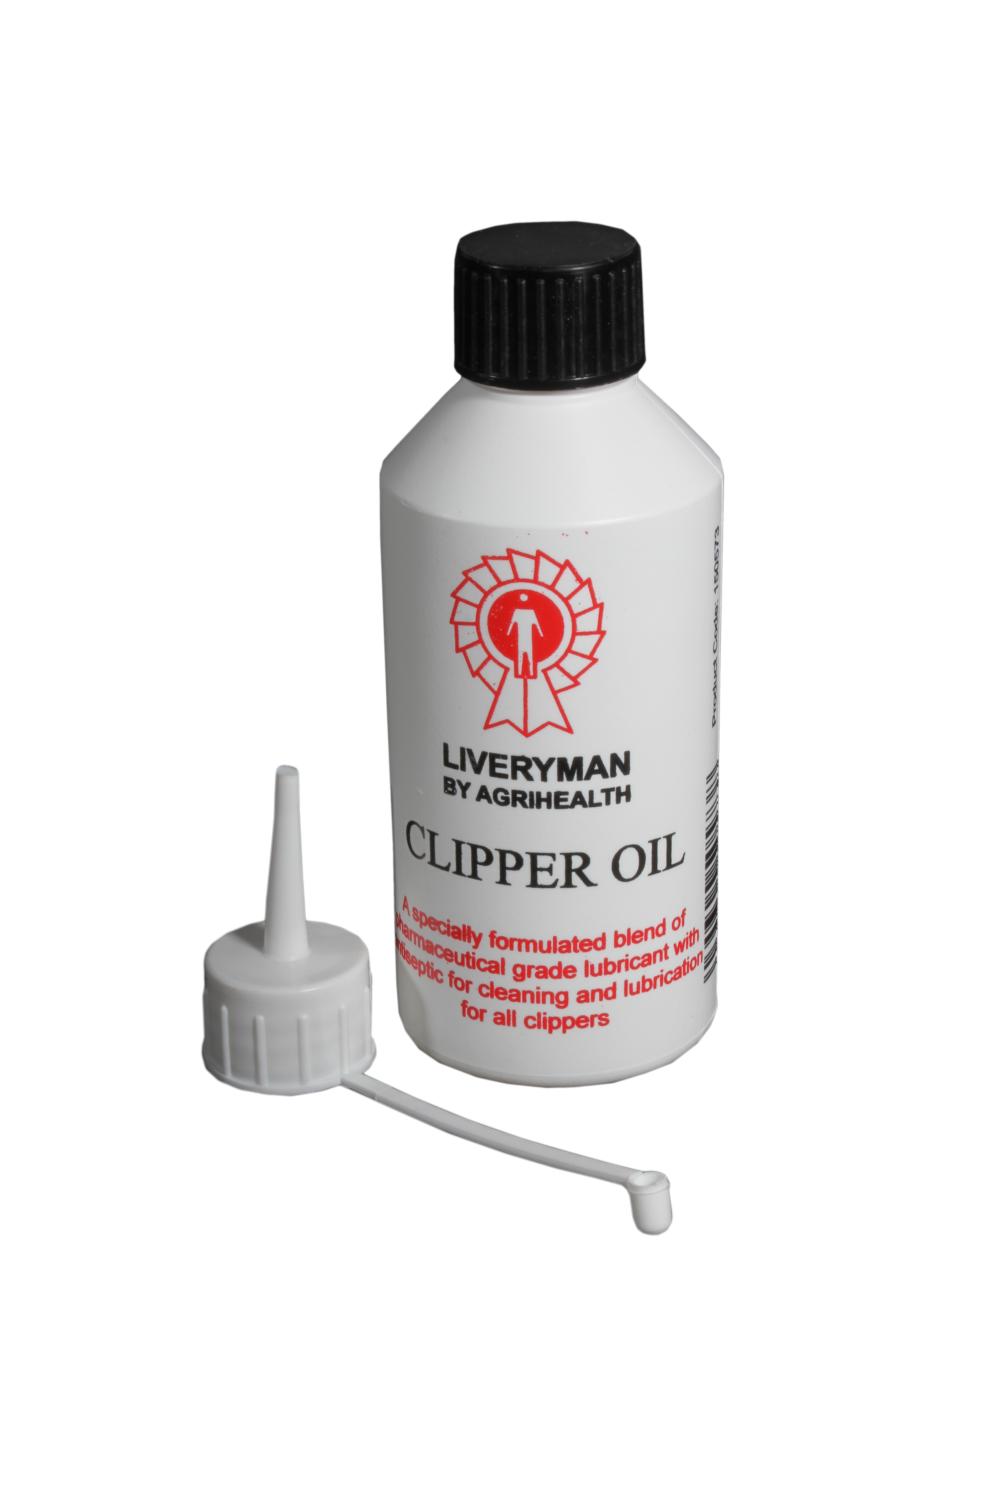 Liveryman Clipper Oil 250ml